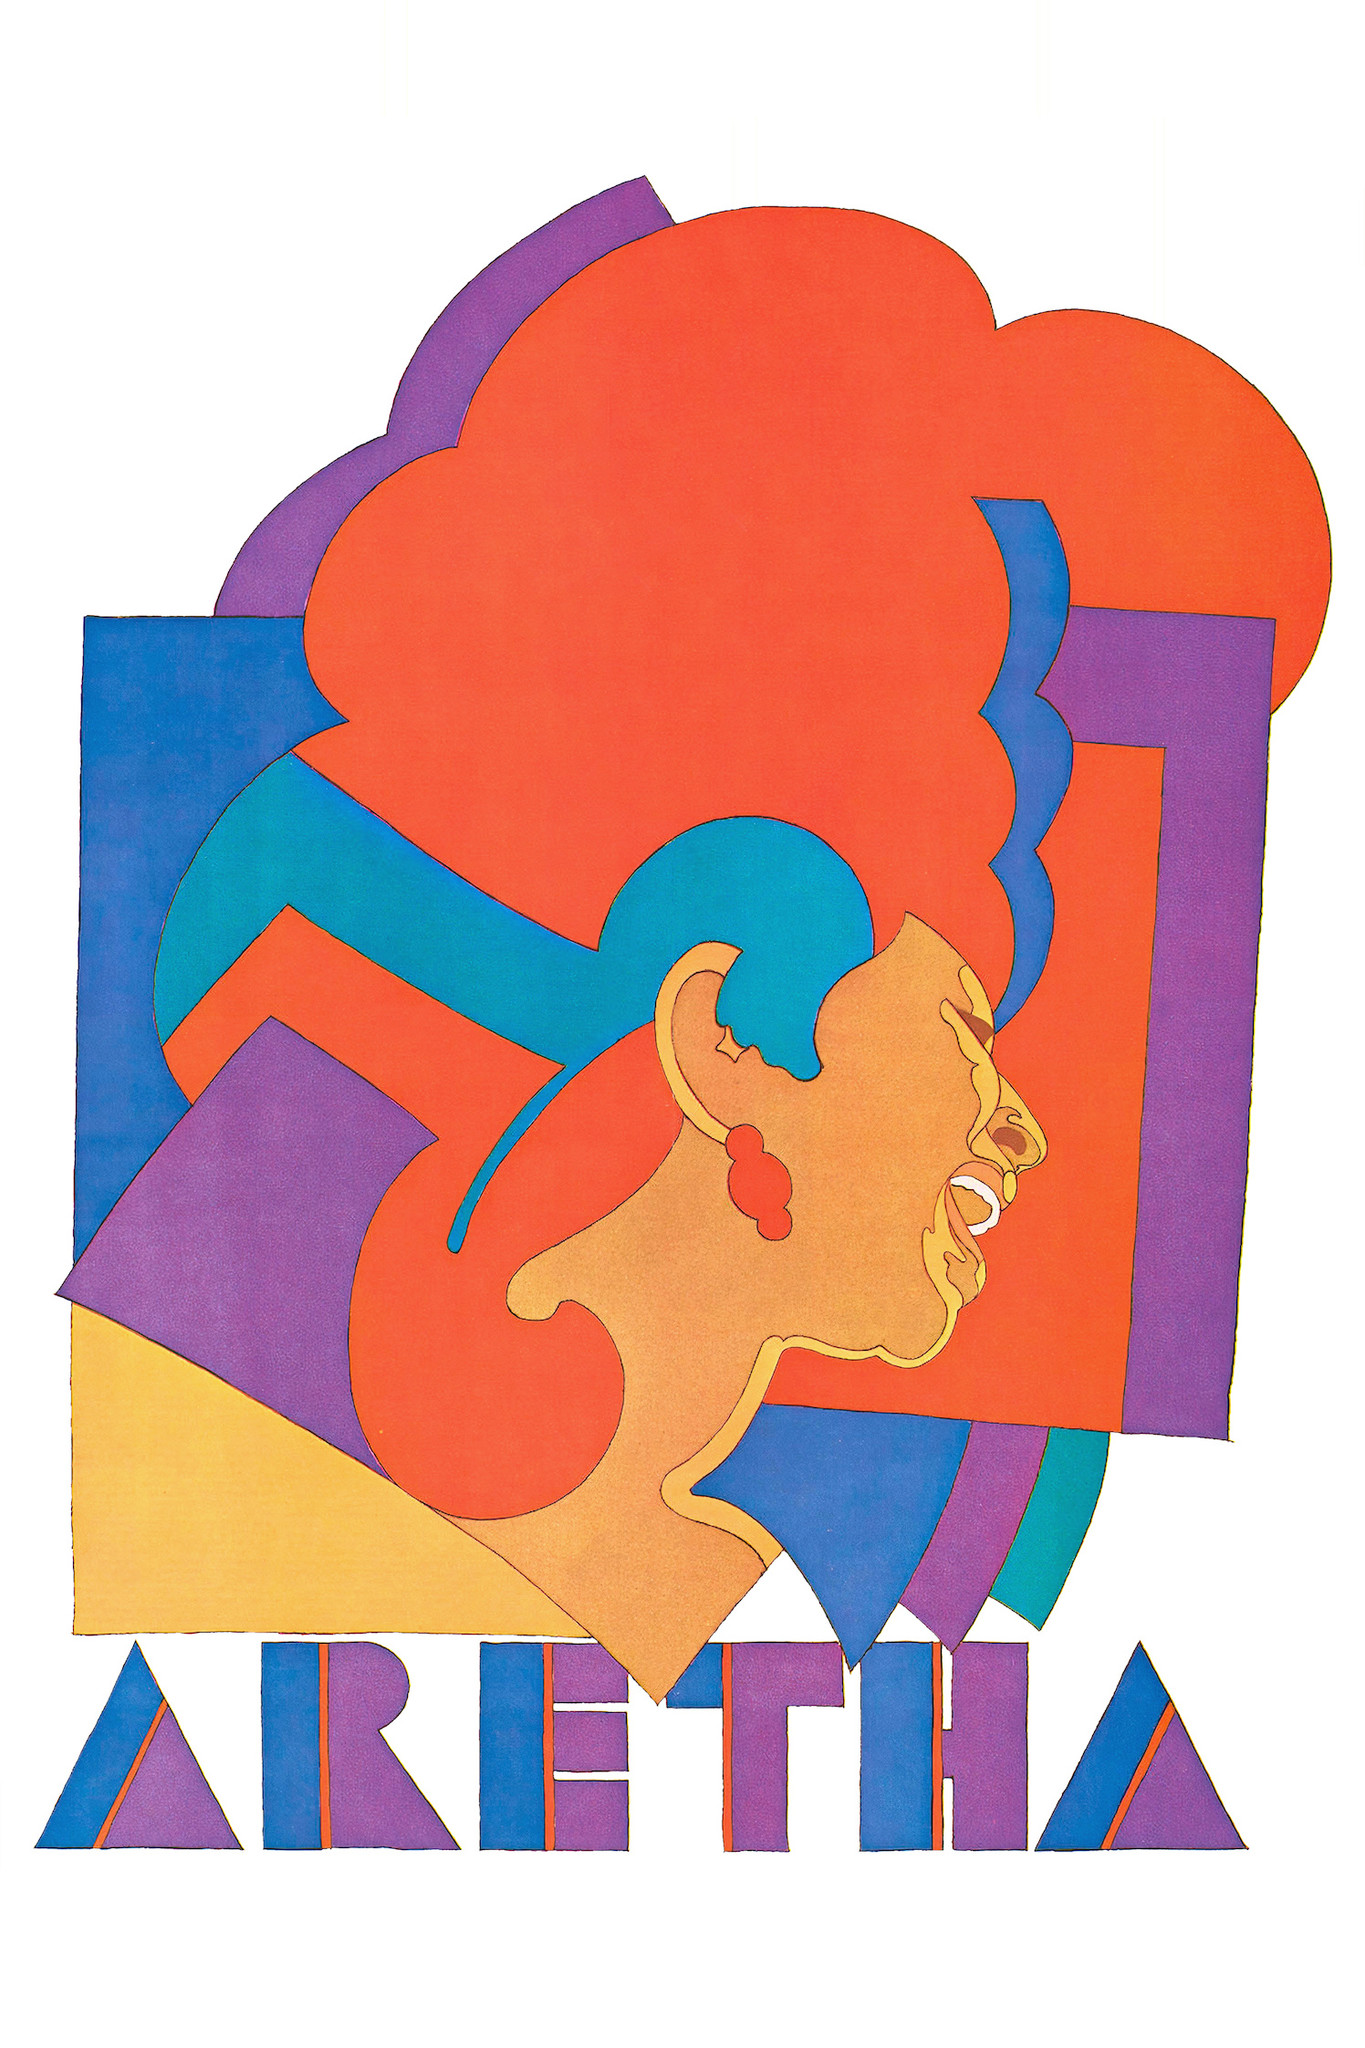 Poster - Aretha Franklin, Kleurrijke poster uit 1968, Premium Print, incl bevestigingsmateriaal